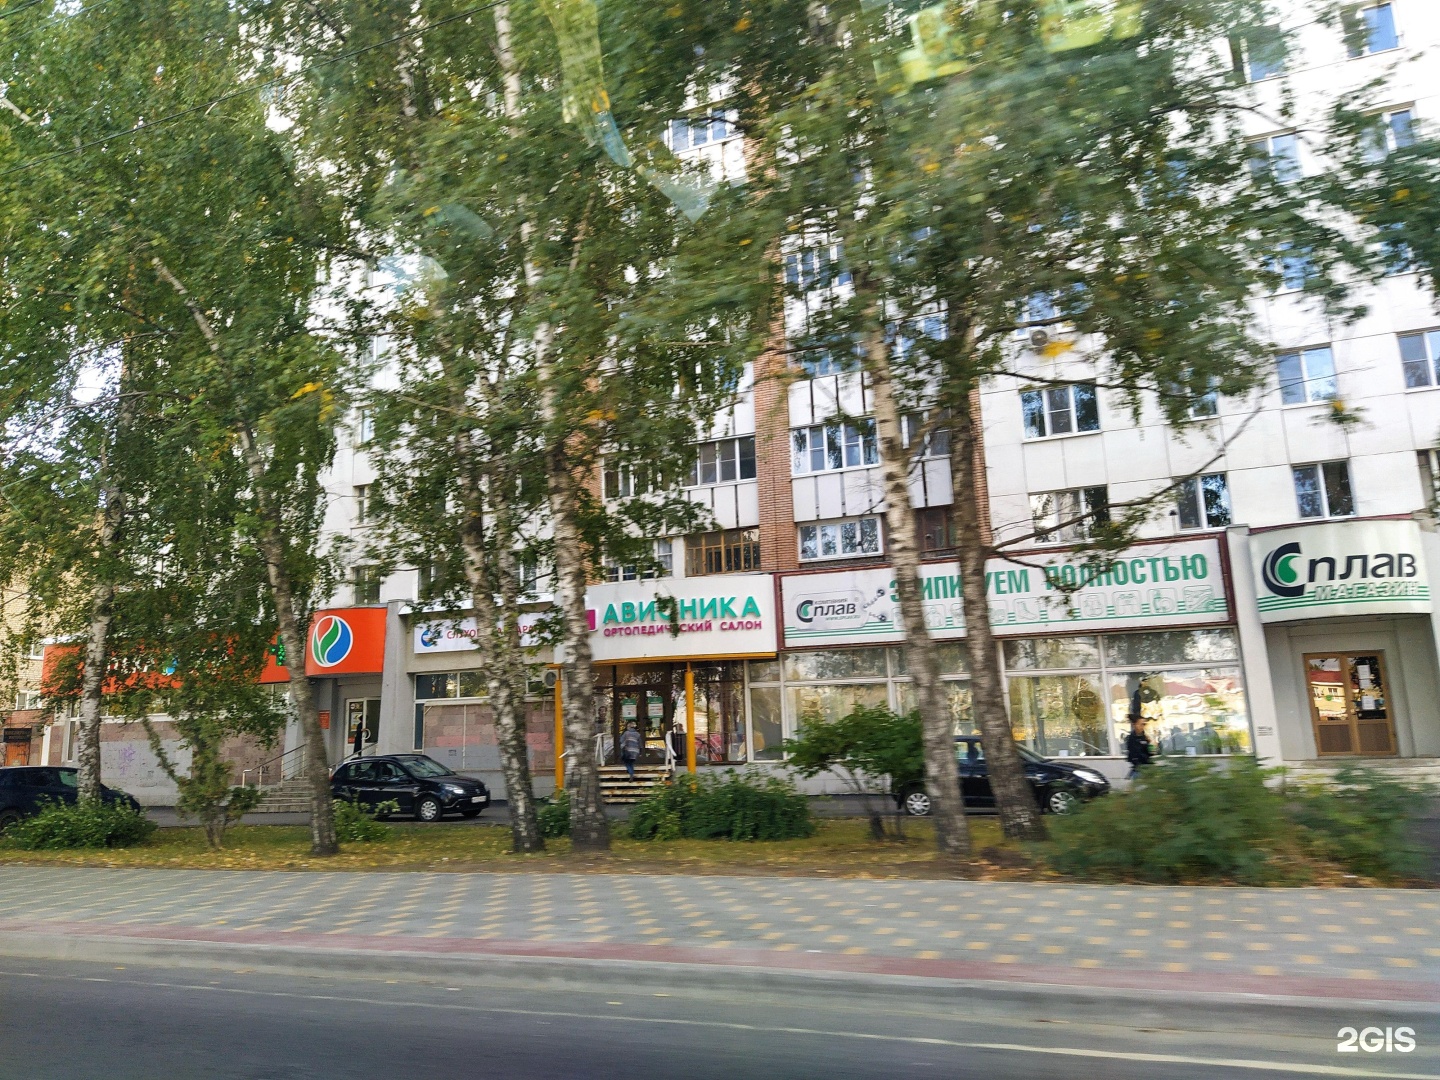 Сплав, Пенза, улица Суворова, 139